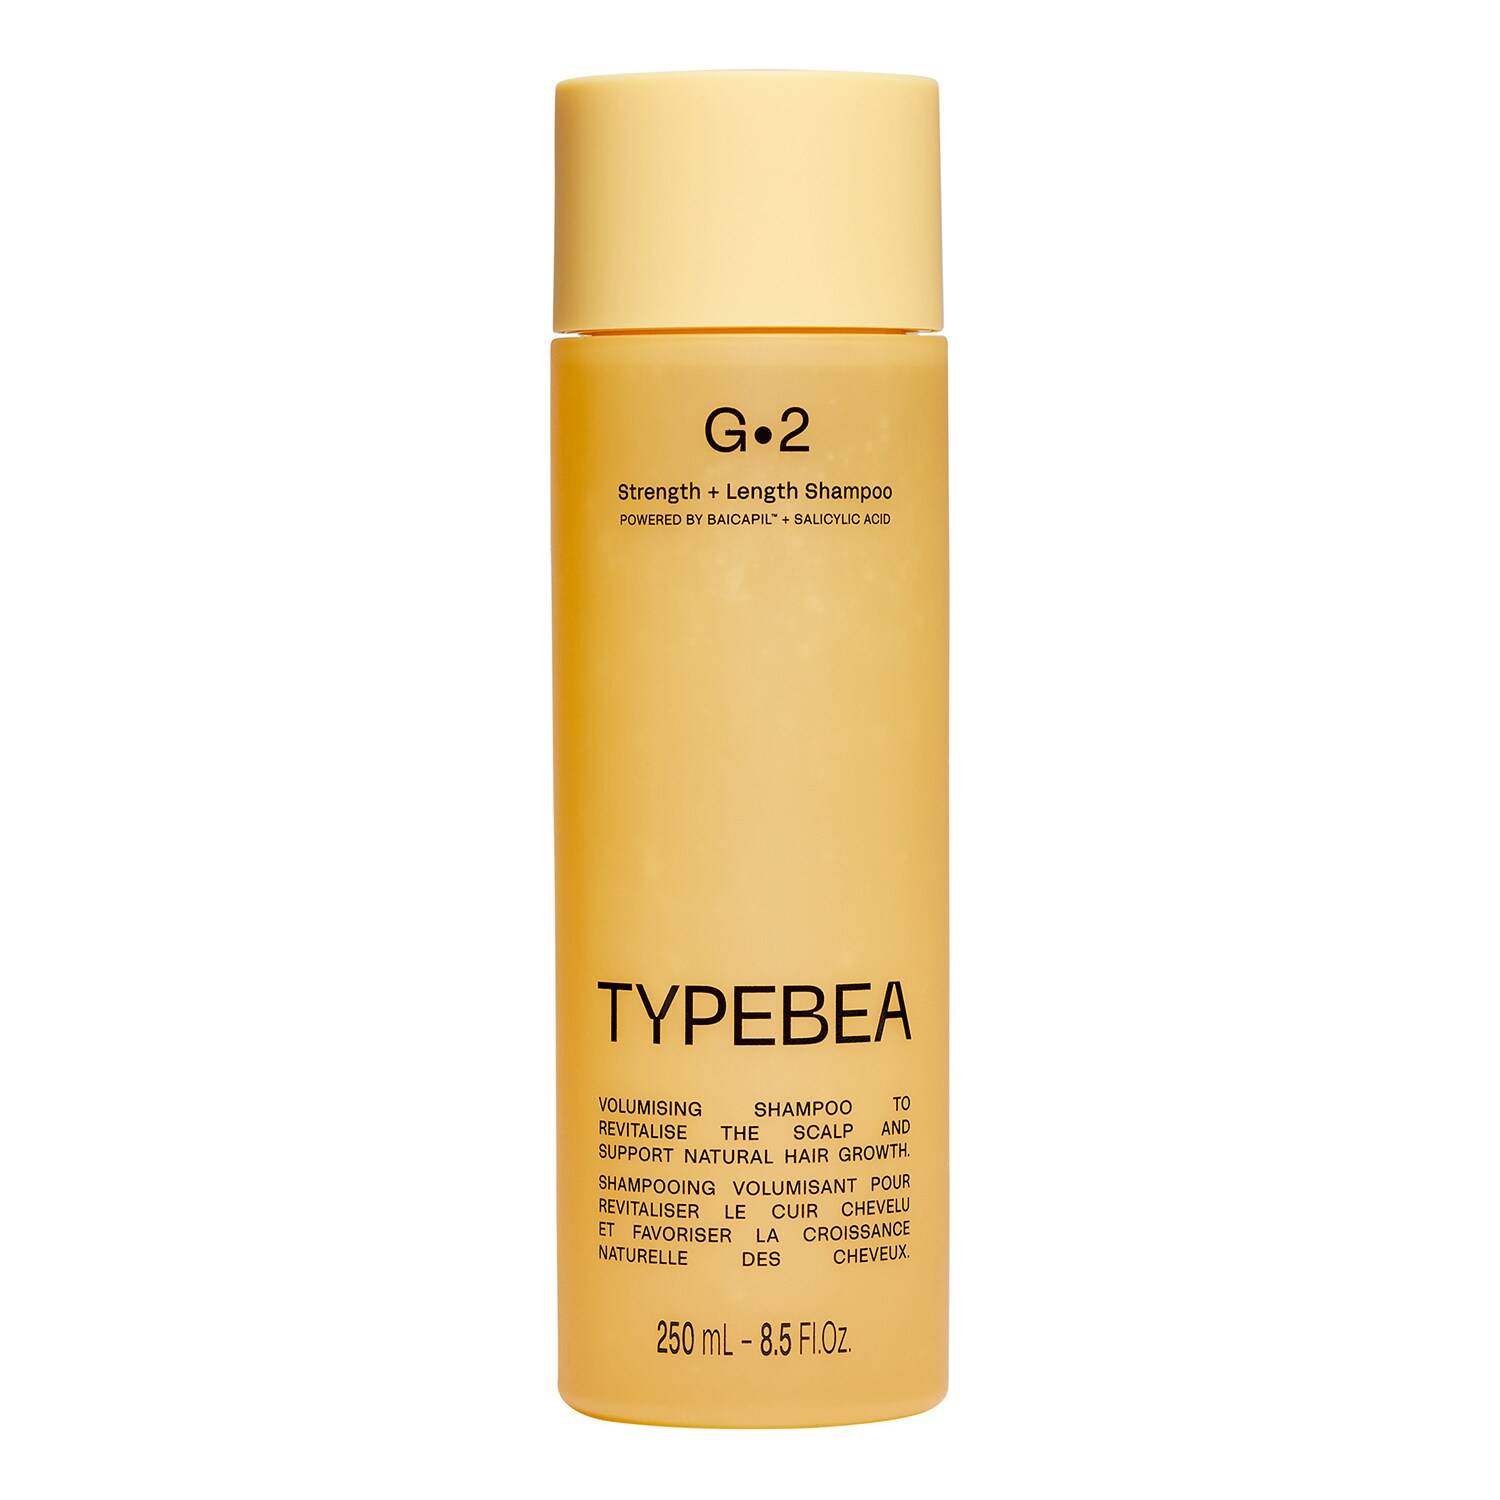 Typebea G2 Strength & Length Shampoo 250Ml